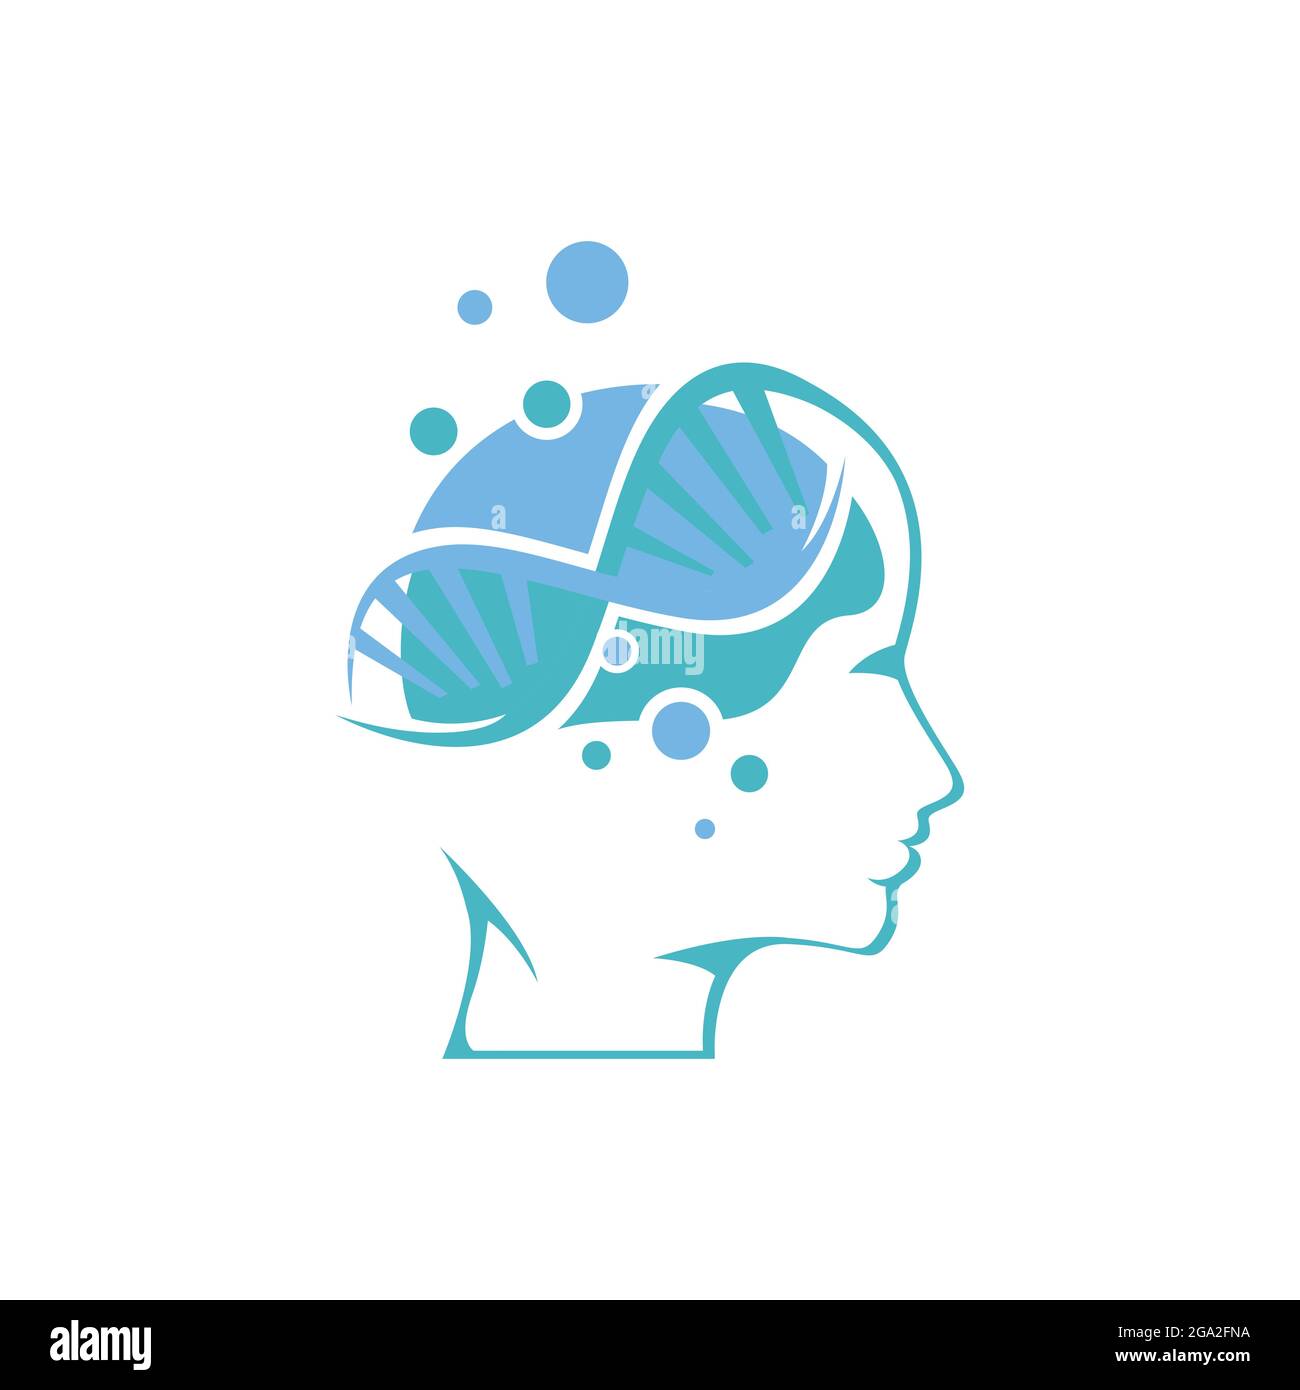 Memory Human Brain Logo Design Illustration Stock Vector